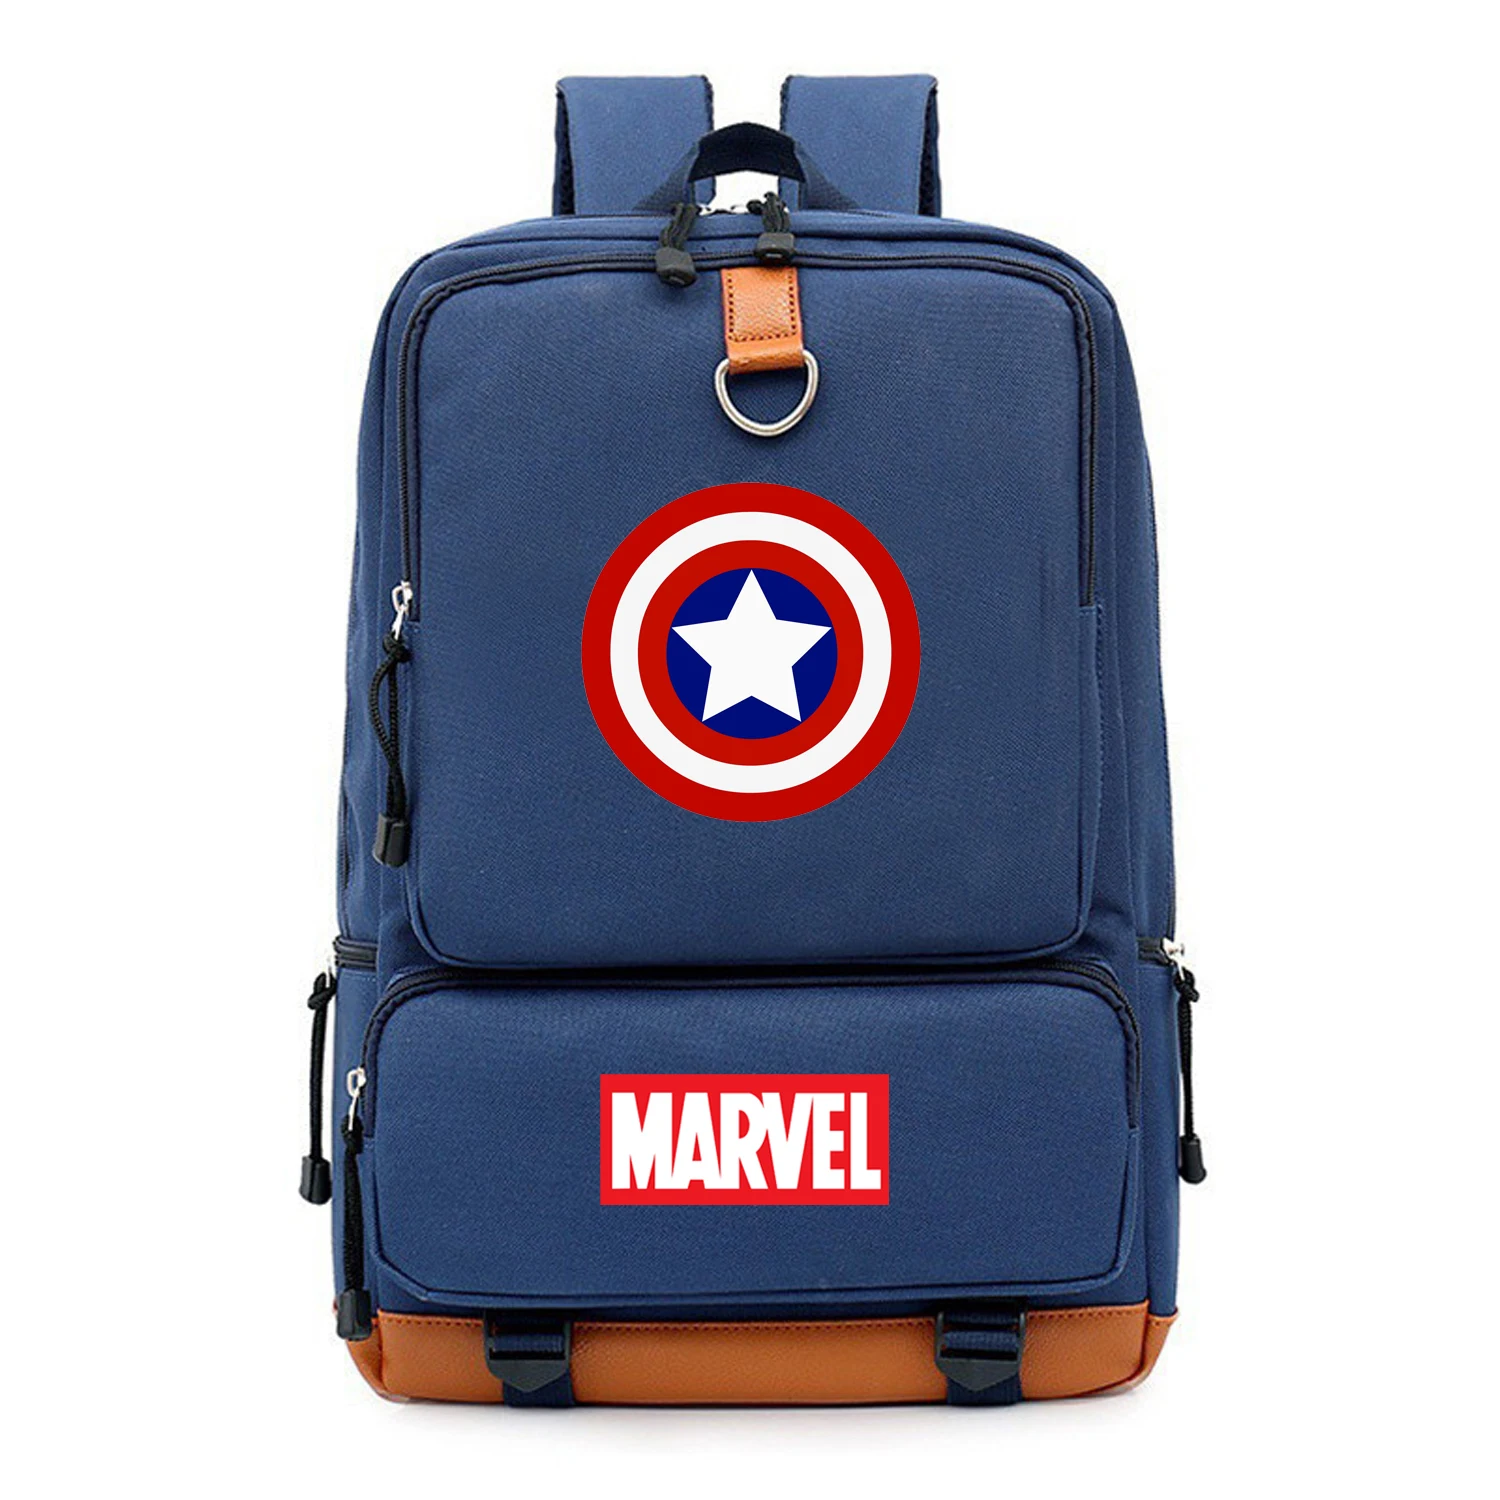 MARVEL Superhero Captain America School Bags Nylon Large Capacity Student Backpack School Bag Boy Escolar Mochila Laptop Bag